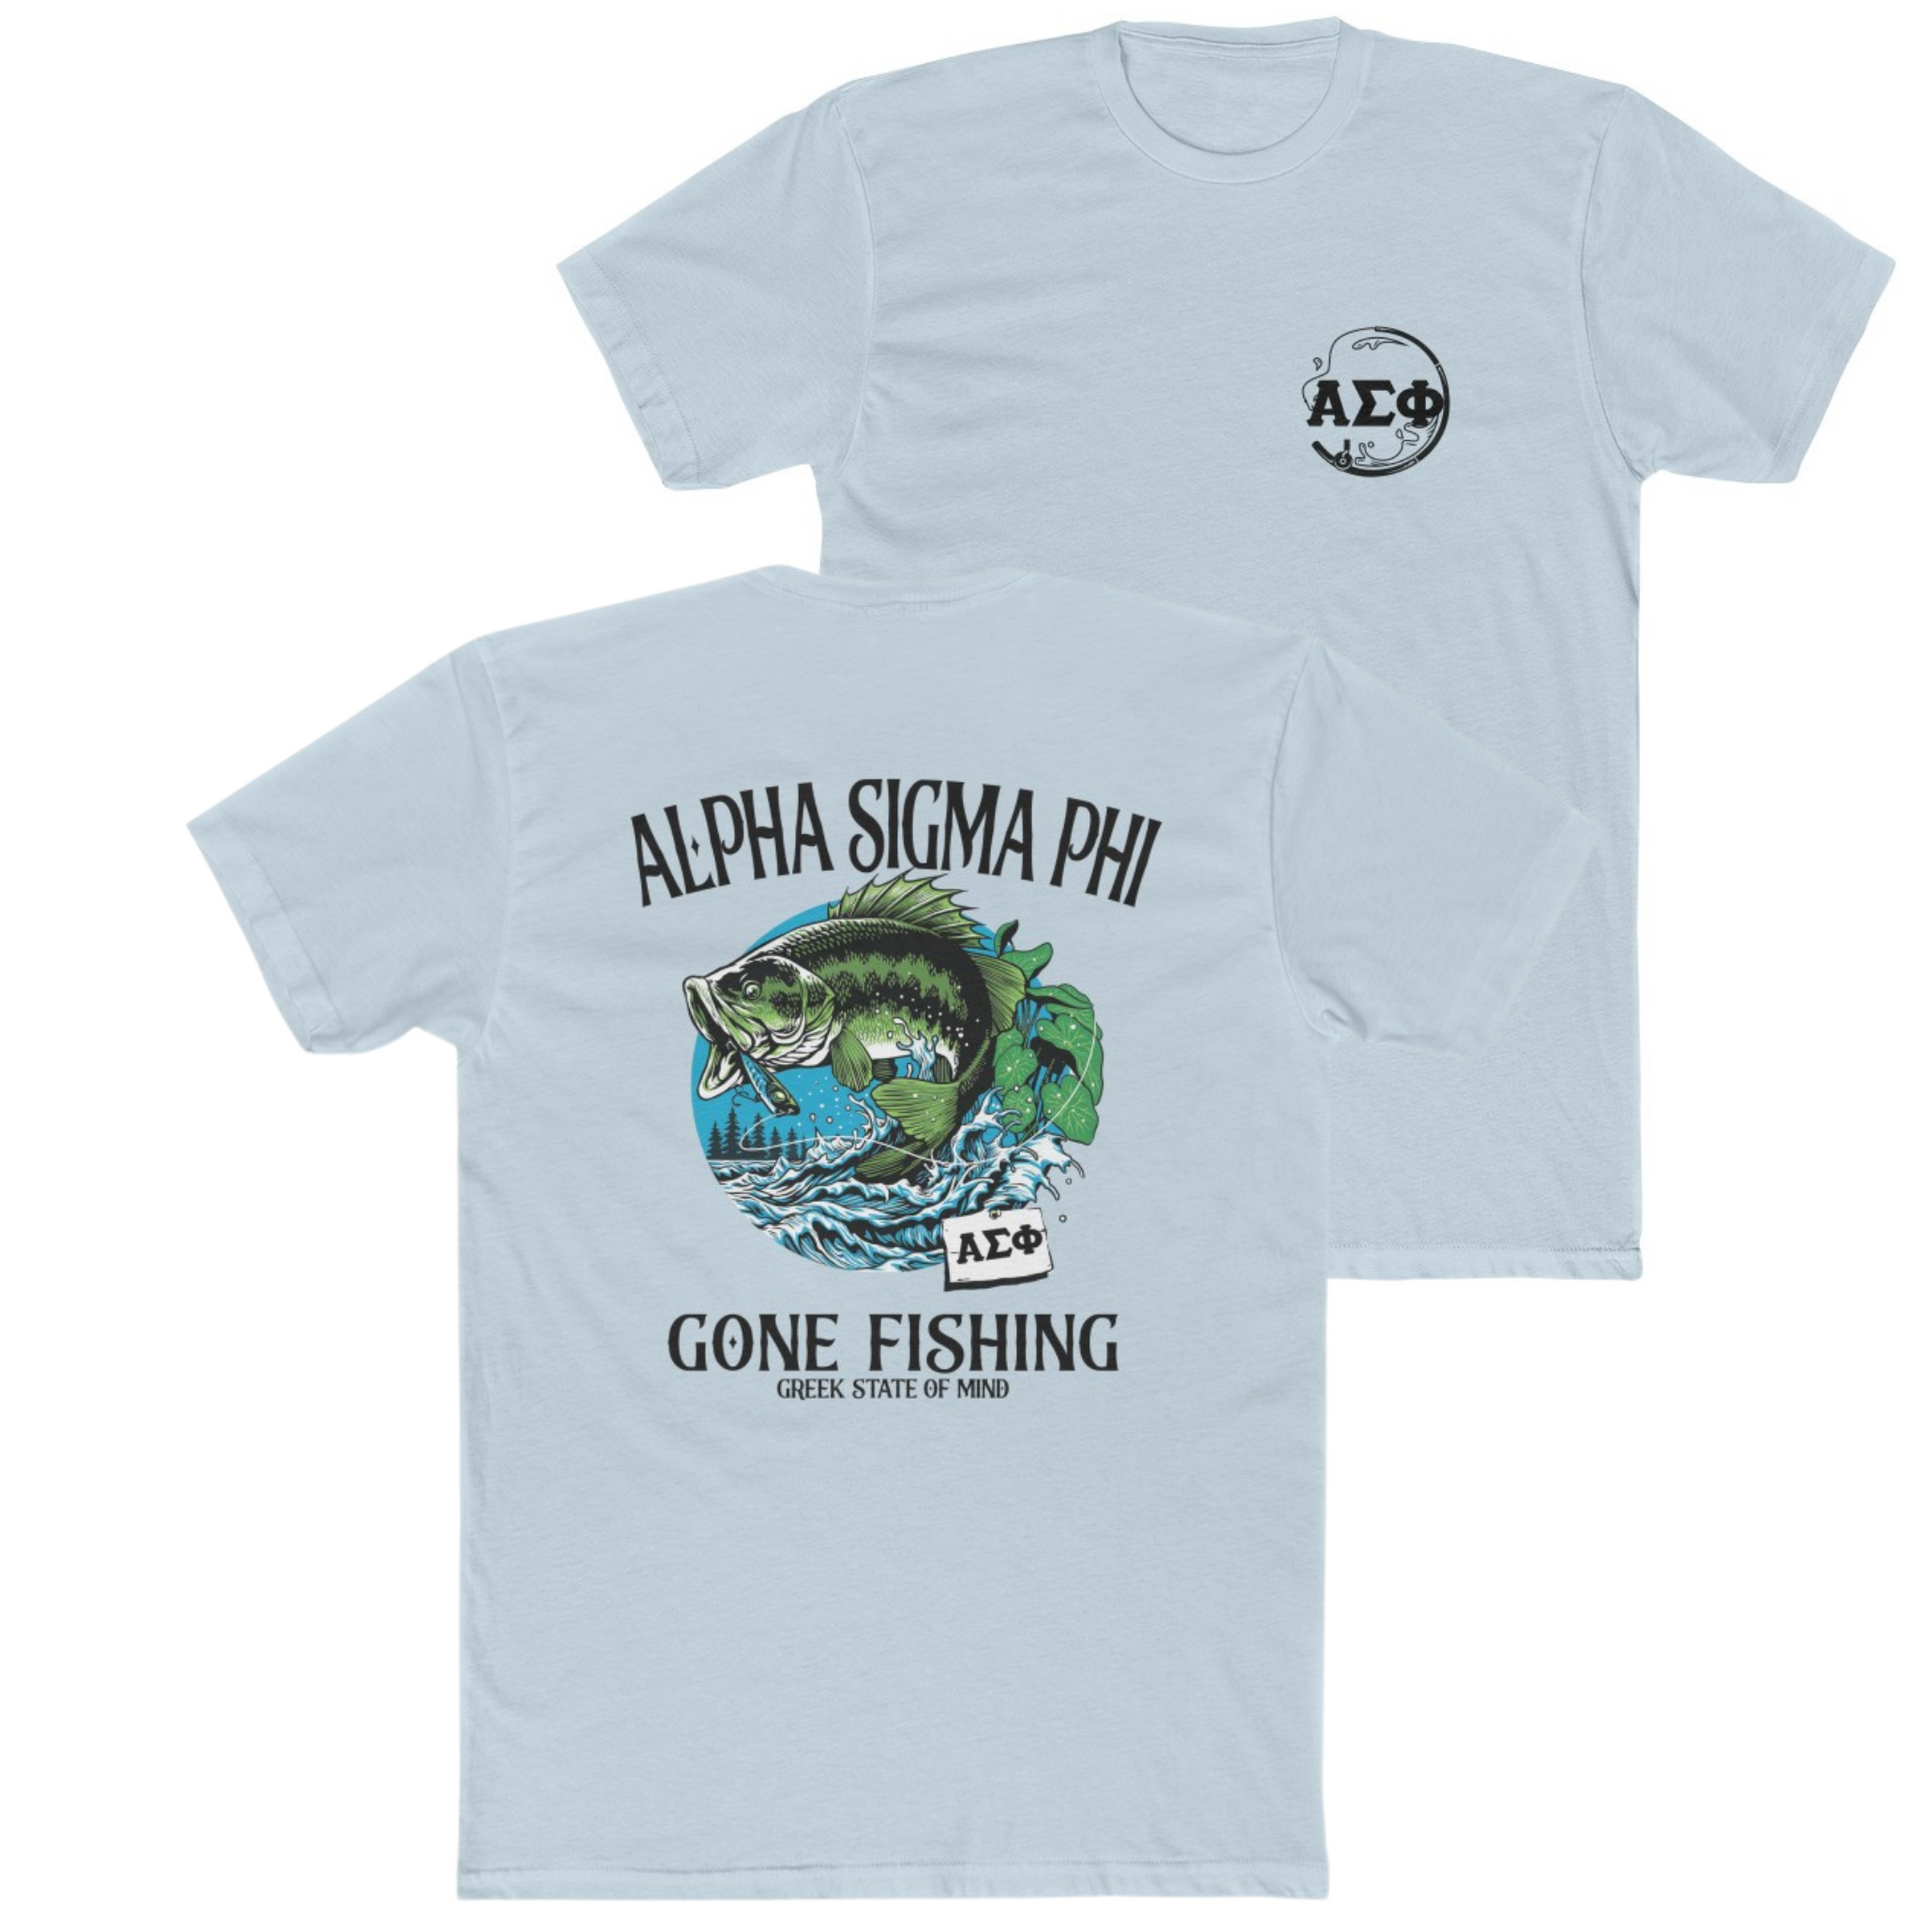 Light Blue Alpha Sigma Phi Graphic T-Shirt | Gone Fishing | Alpha Sigma Phi Fraternity Shirt